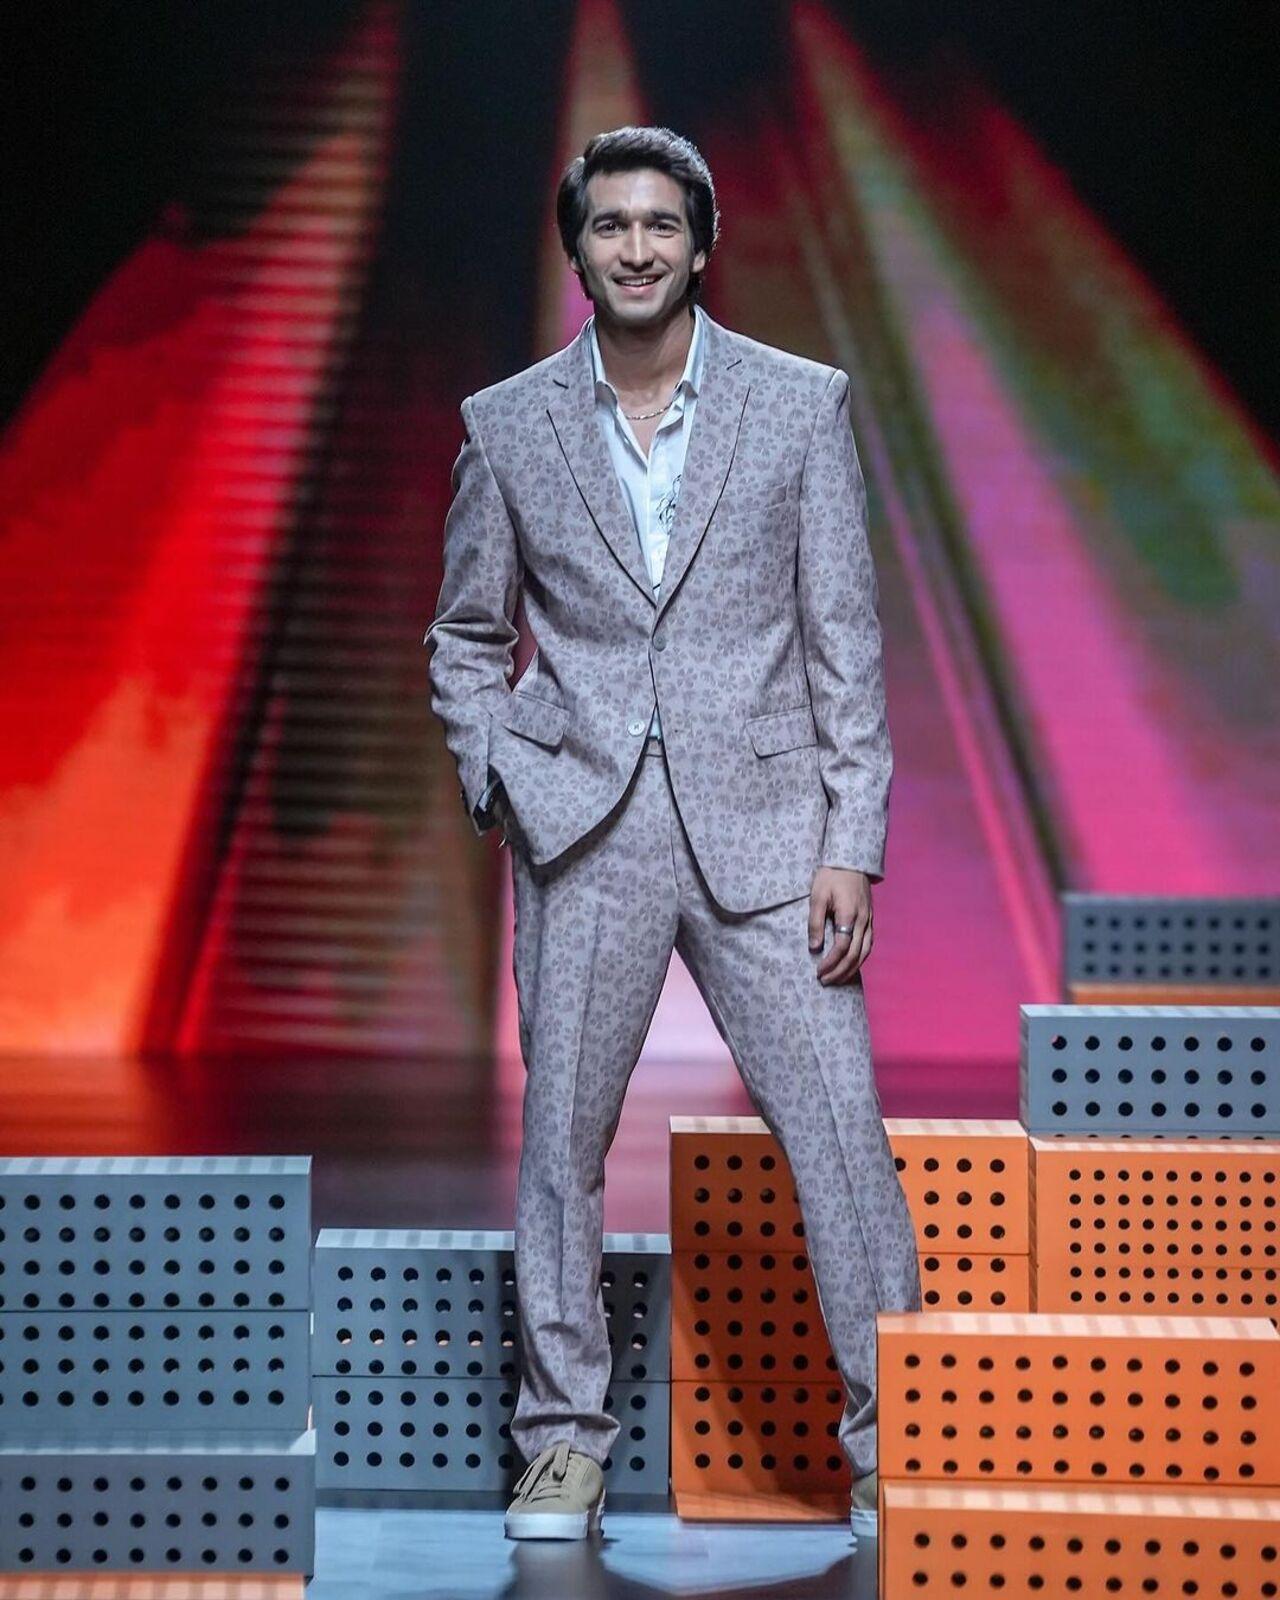 Shantanu Maheshwari who shone with his performance in Gangubai Kathiawadi recently walked the ramp in a grey suit